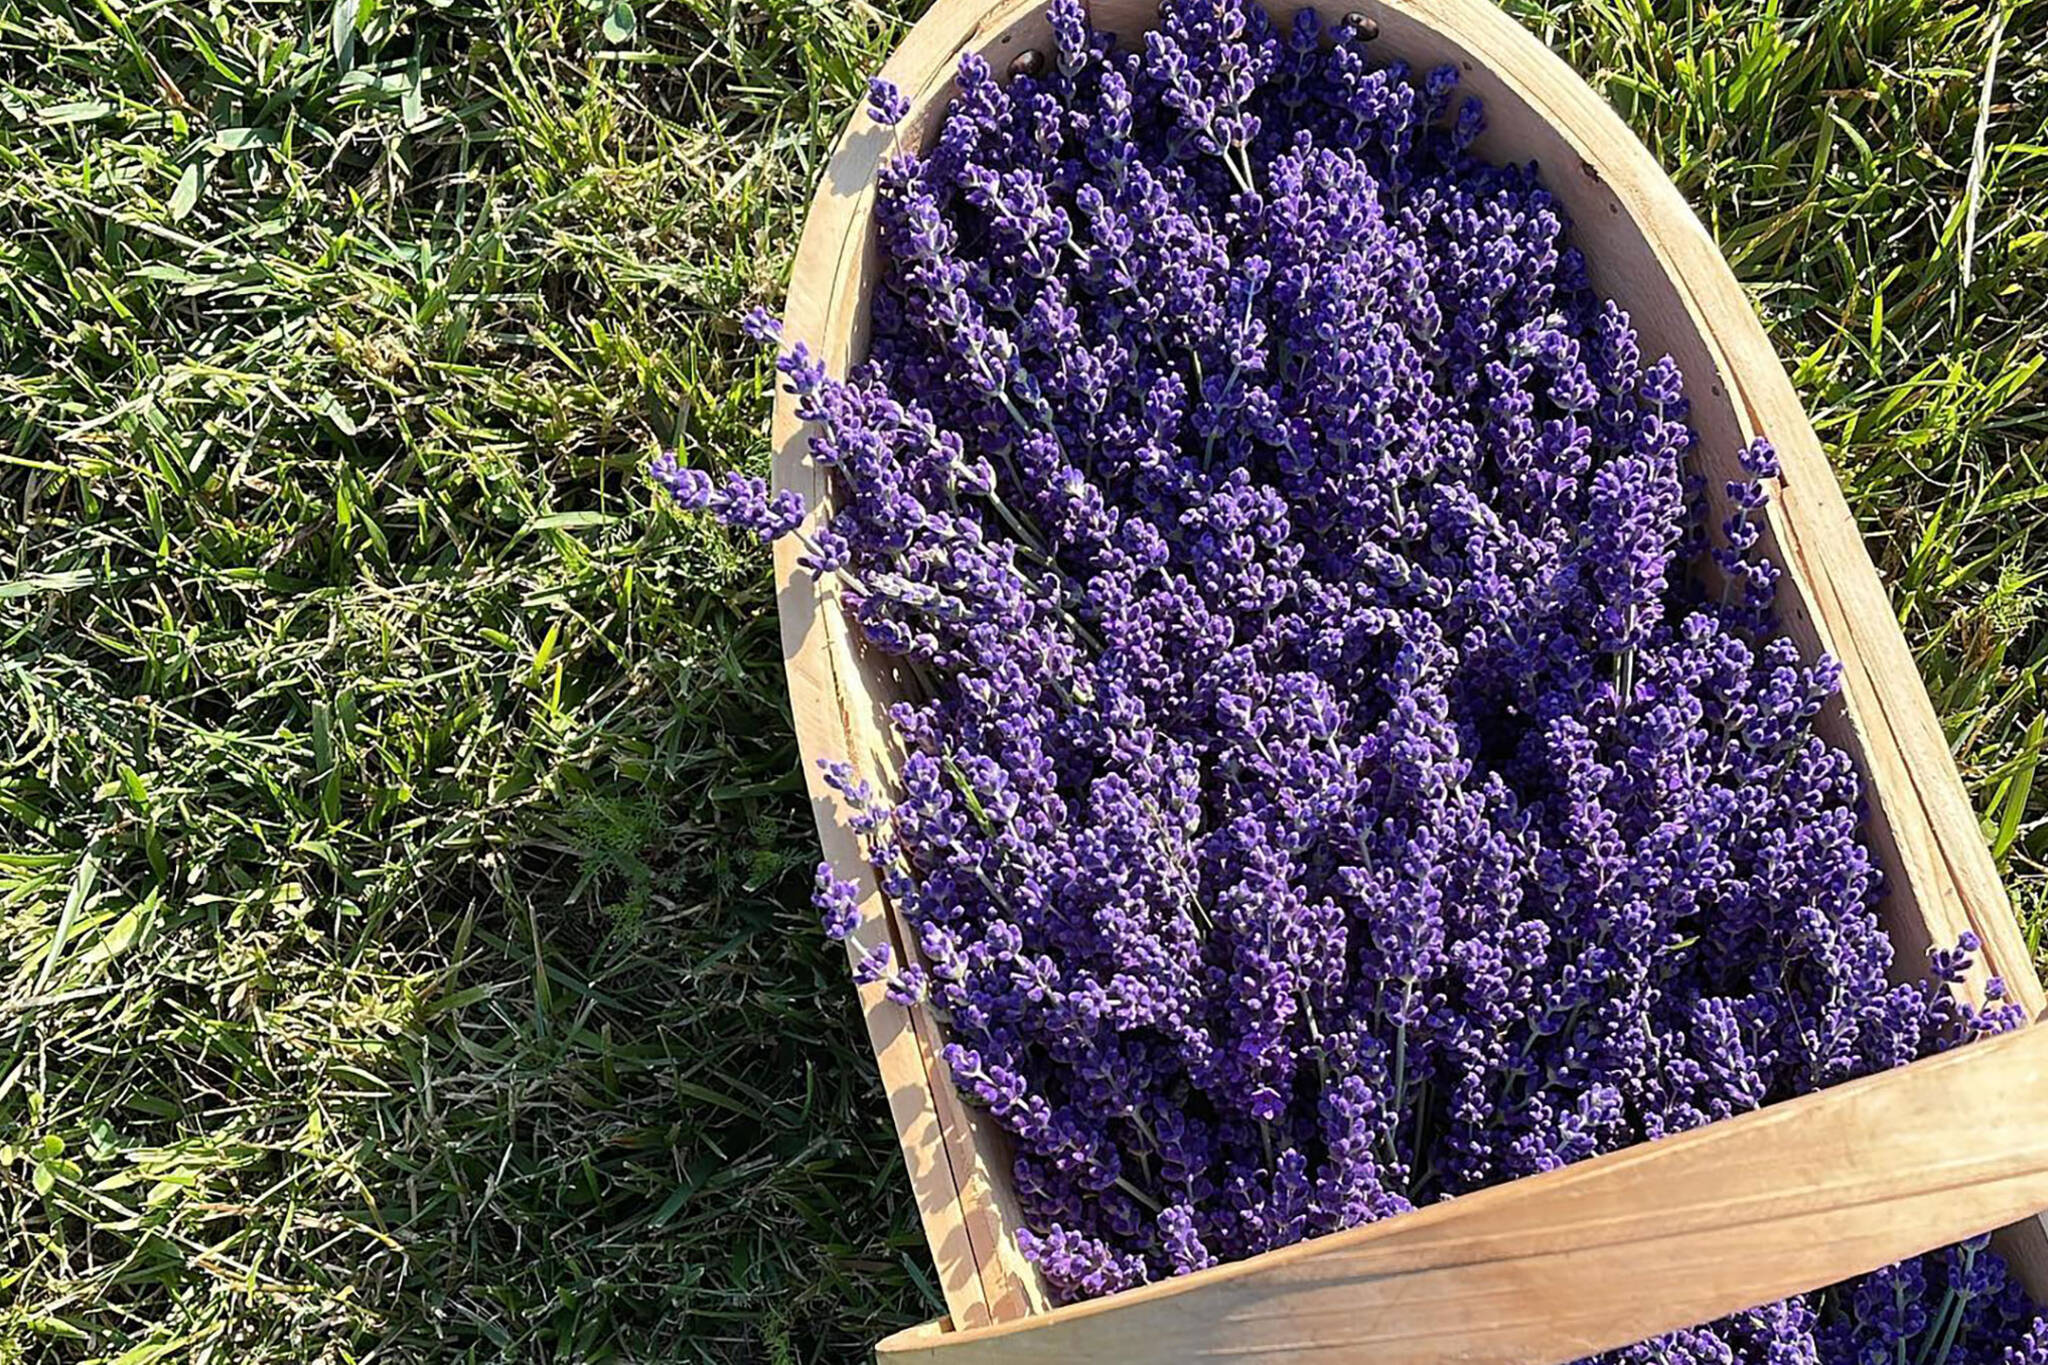 hereward farms lavender